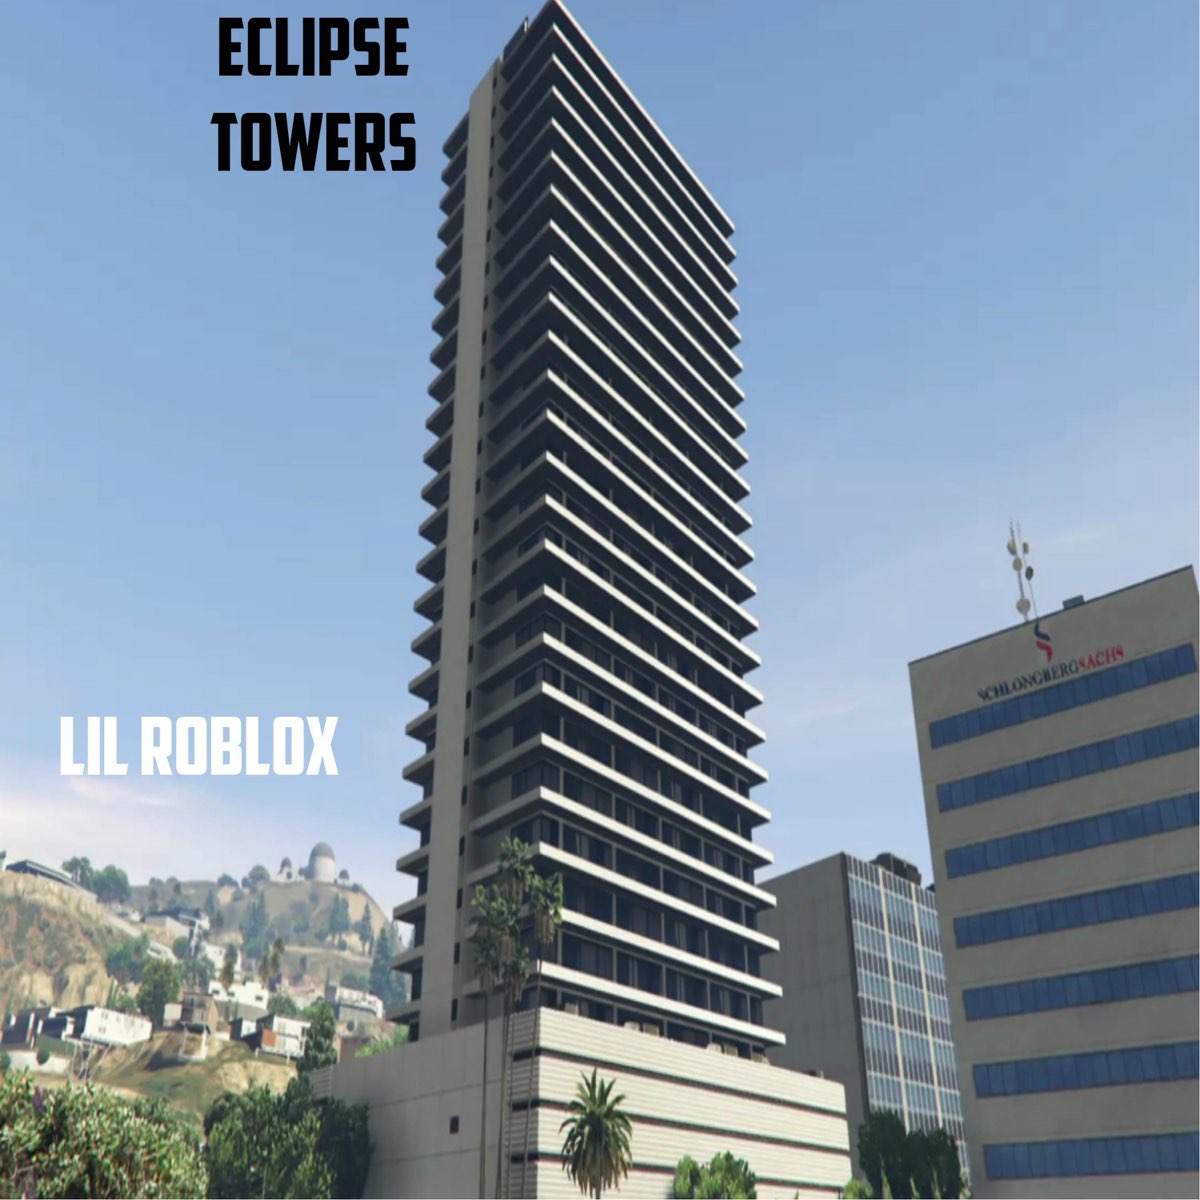 Eclipse towers gta 5 фото 70